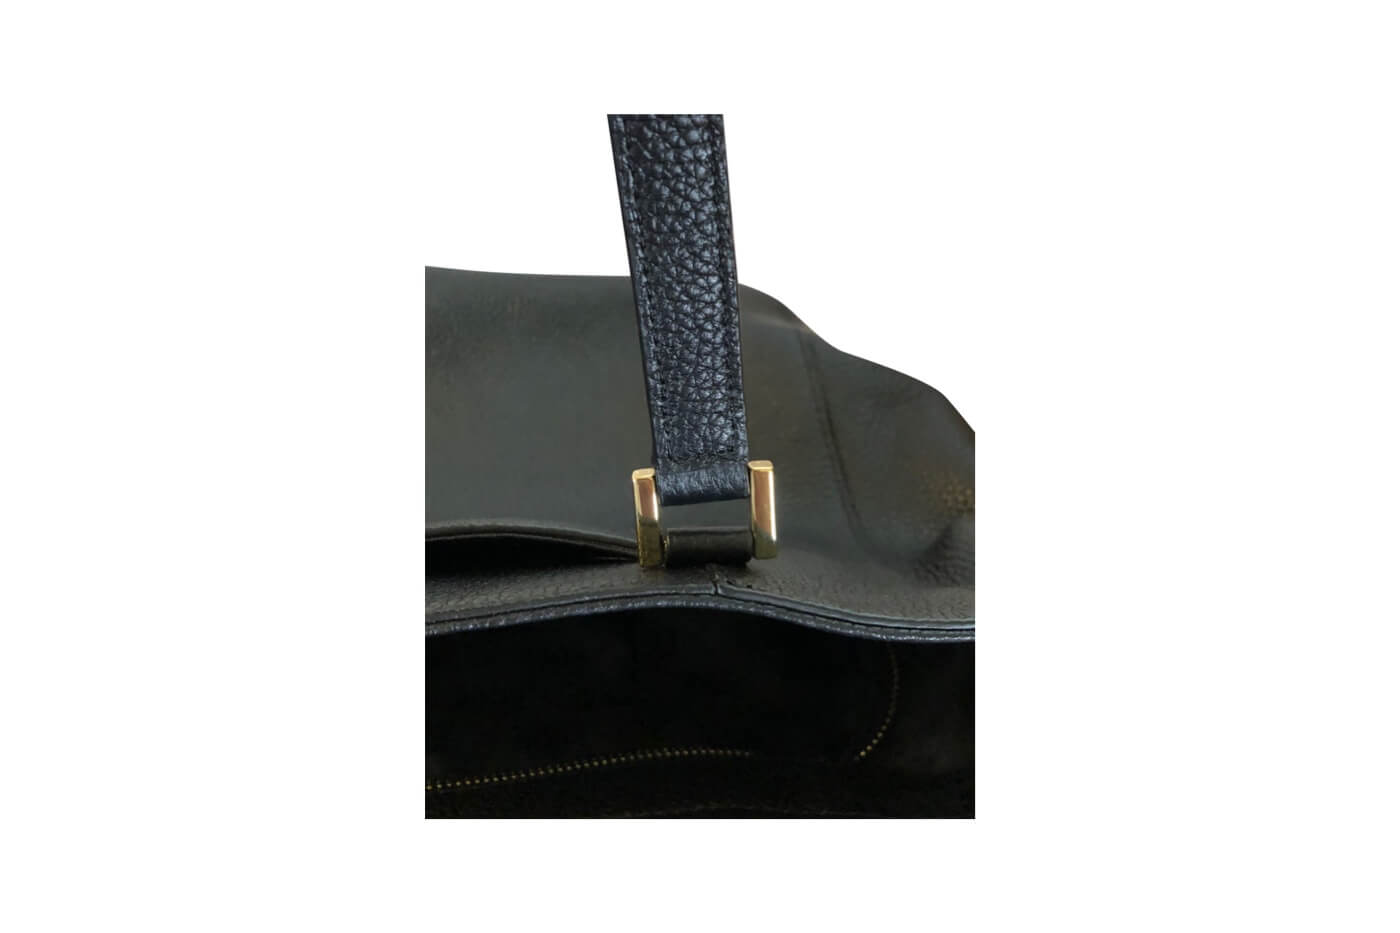 Michael Kors Handbag Strap Repair — SoleHeeled